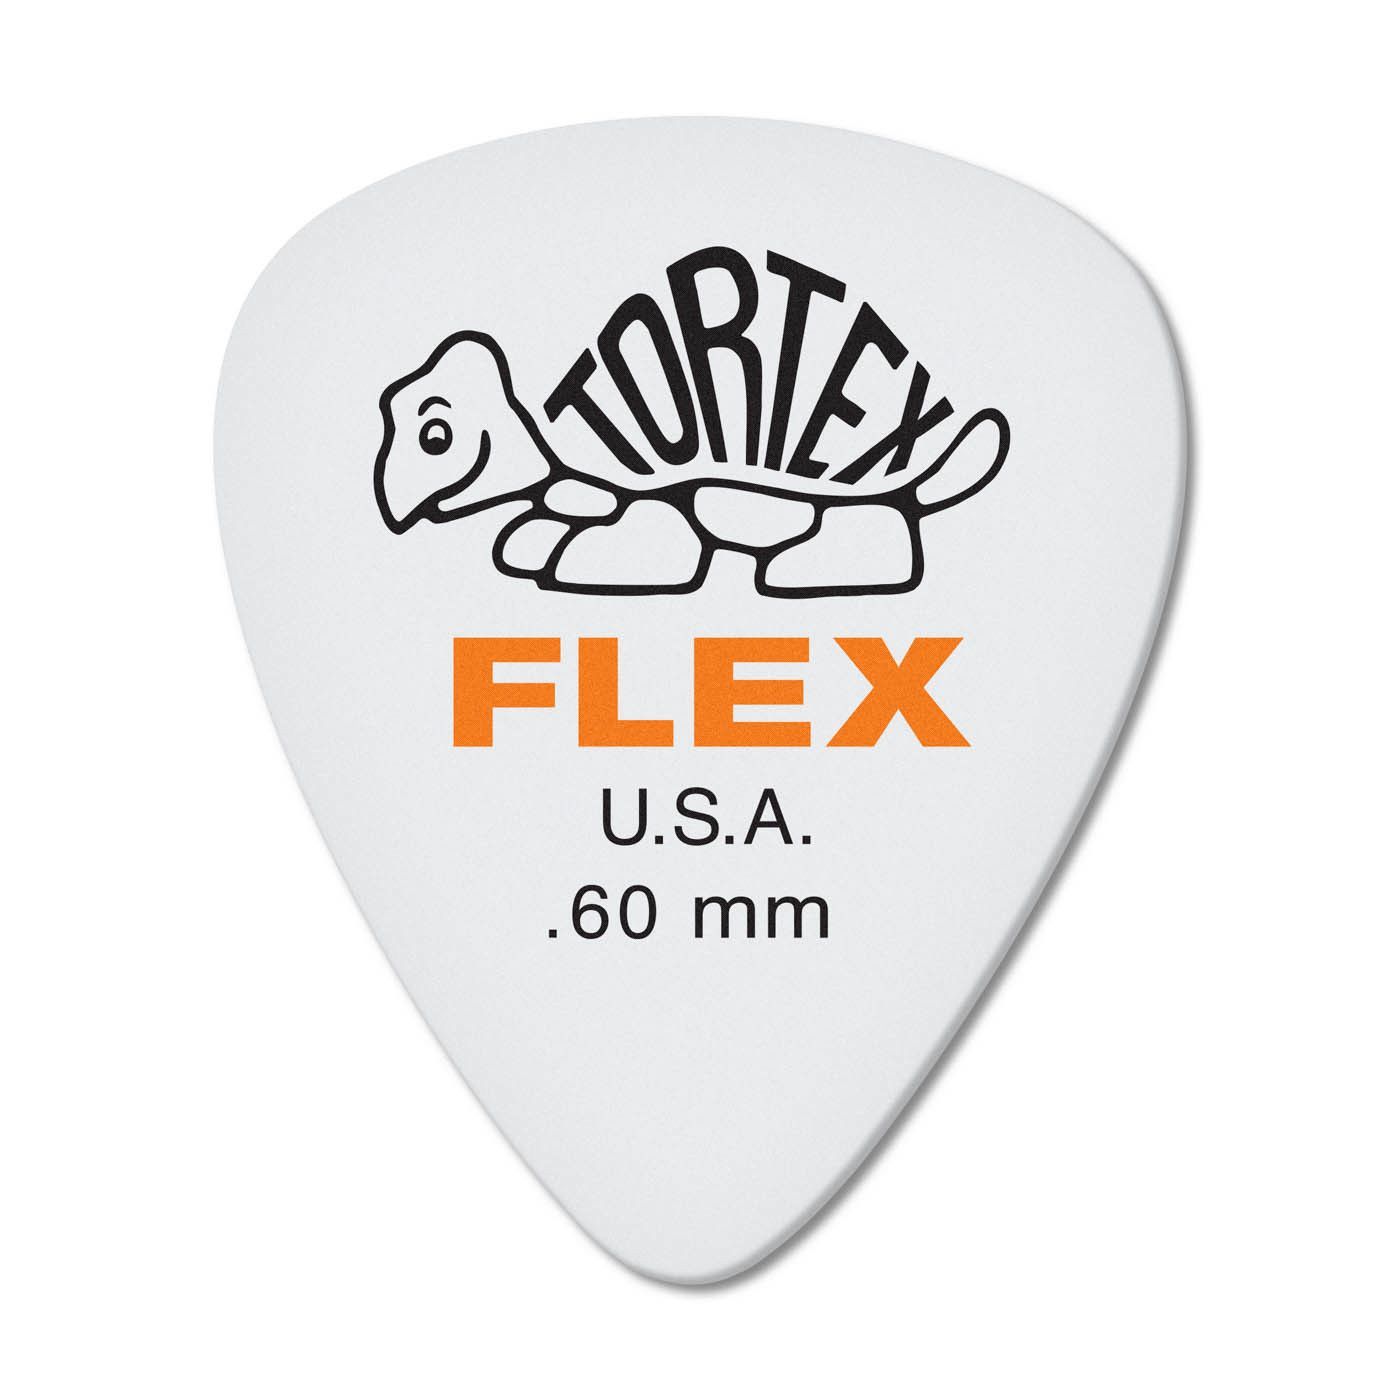 Dunlop Tortex Flex 0.60 mm - kostka do gitary